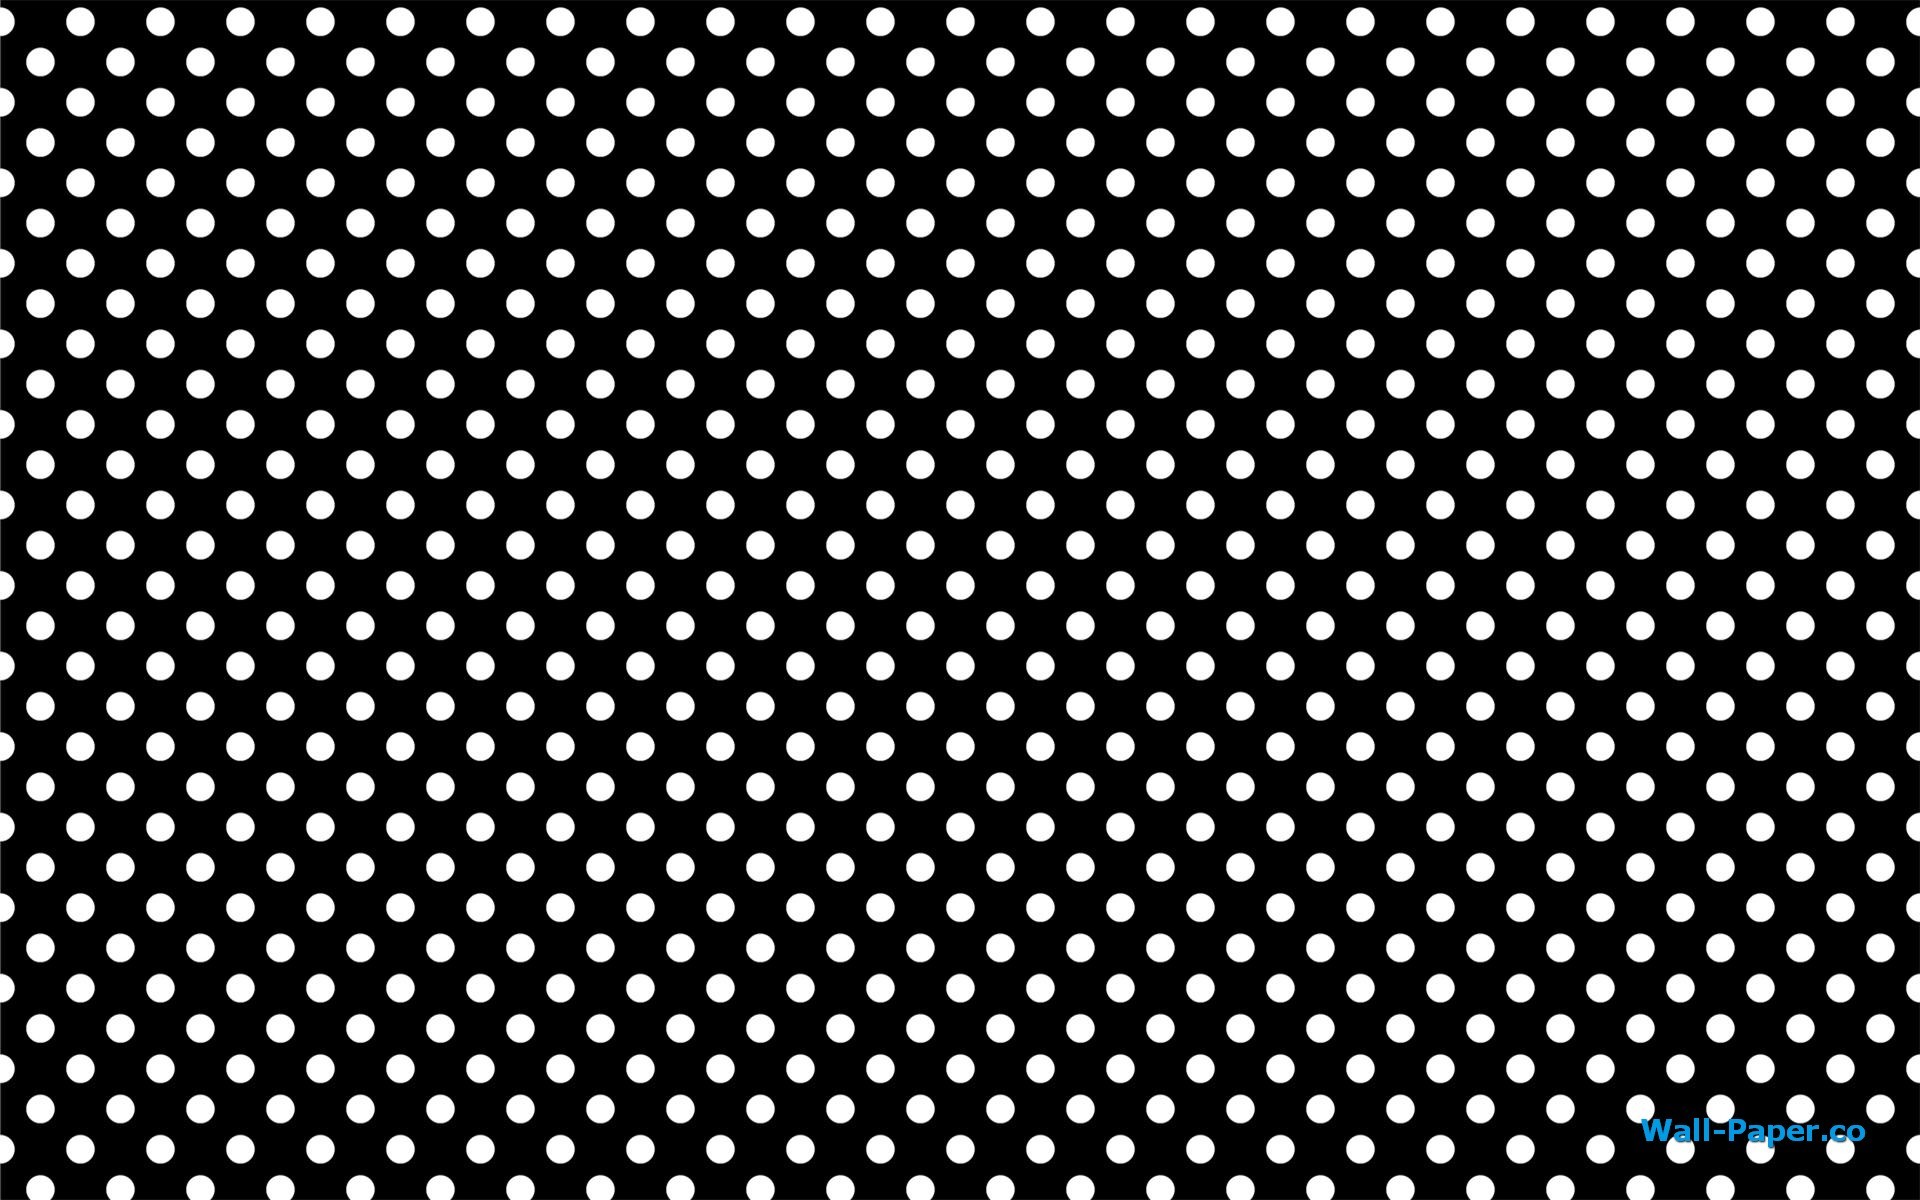 Black and White Dot Wallpaper 76 images